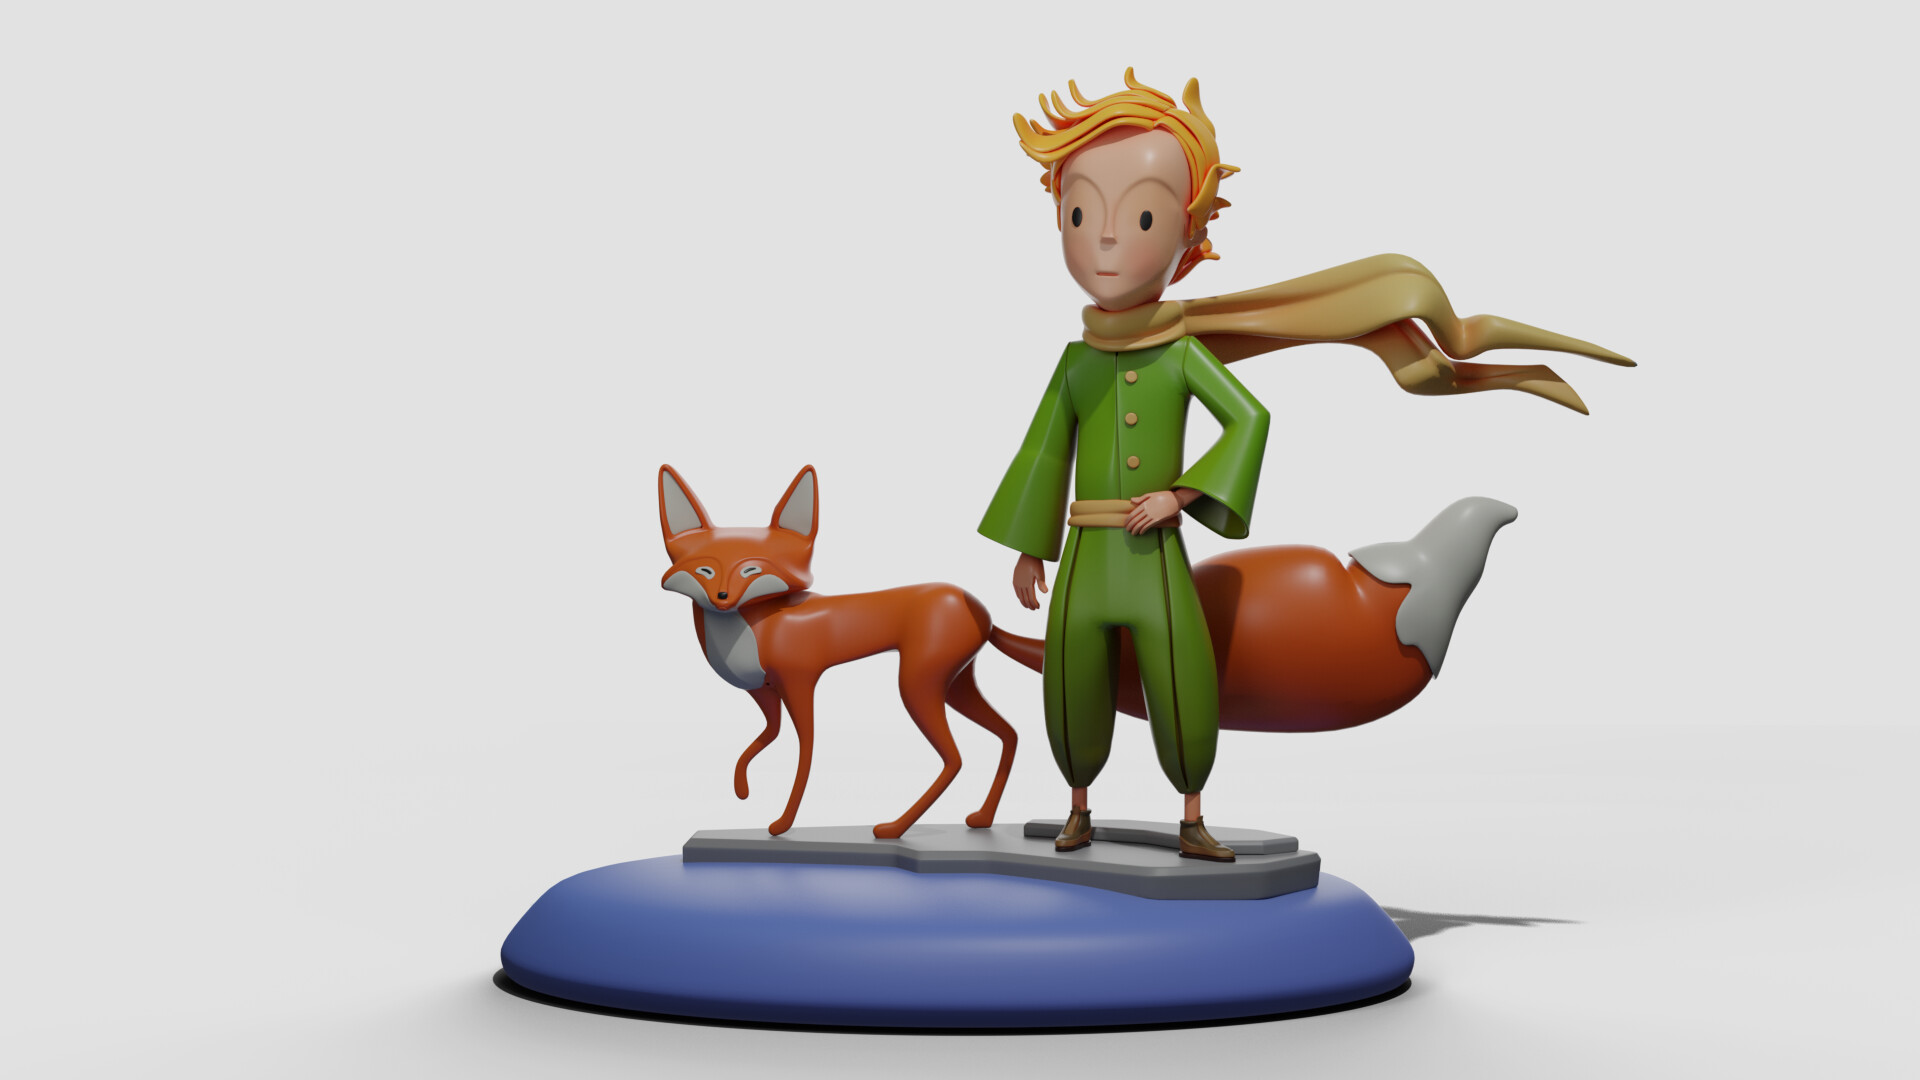 Artstation - The Little Prince 3D